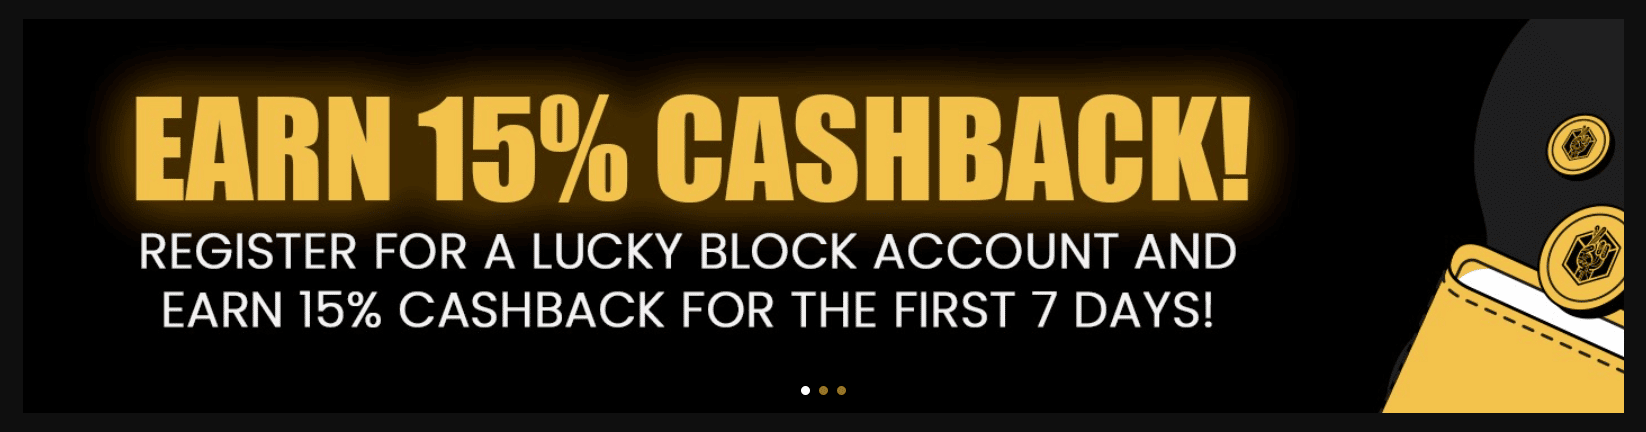 cashback casino lucky block banner